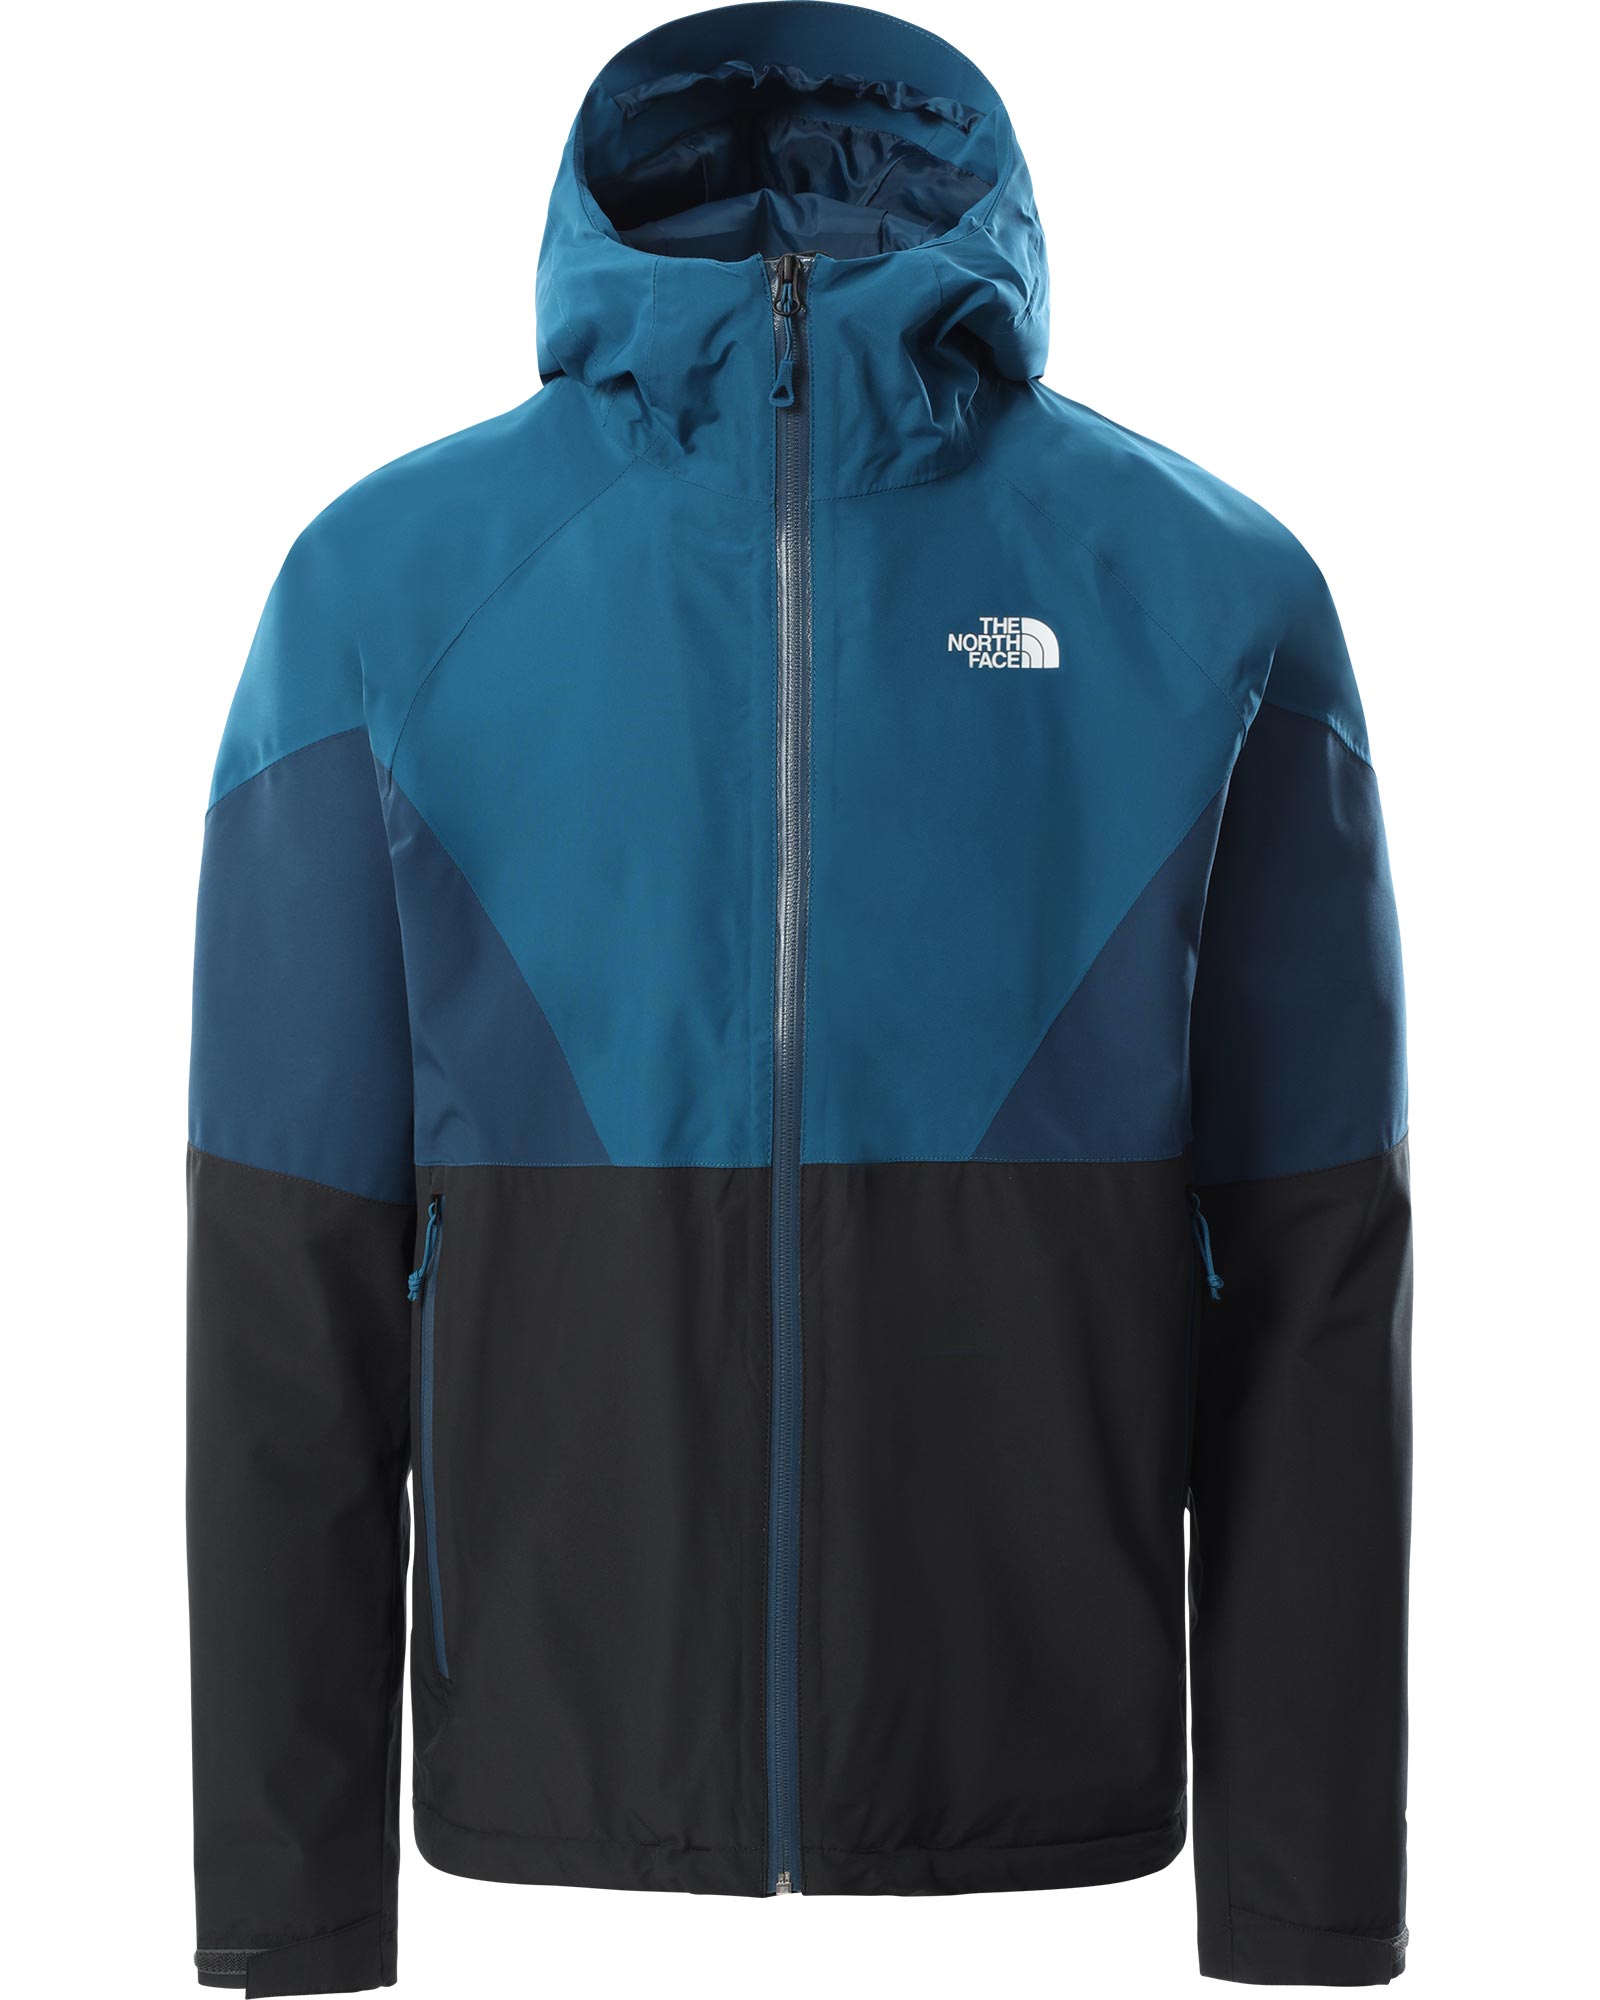 The North Face Lightning Men’s Jacket - Asphalt Grey-Optic Blue-Shady Blue S